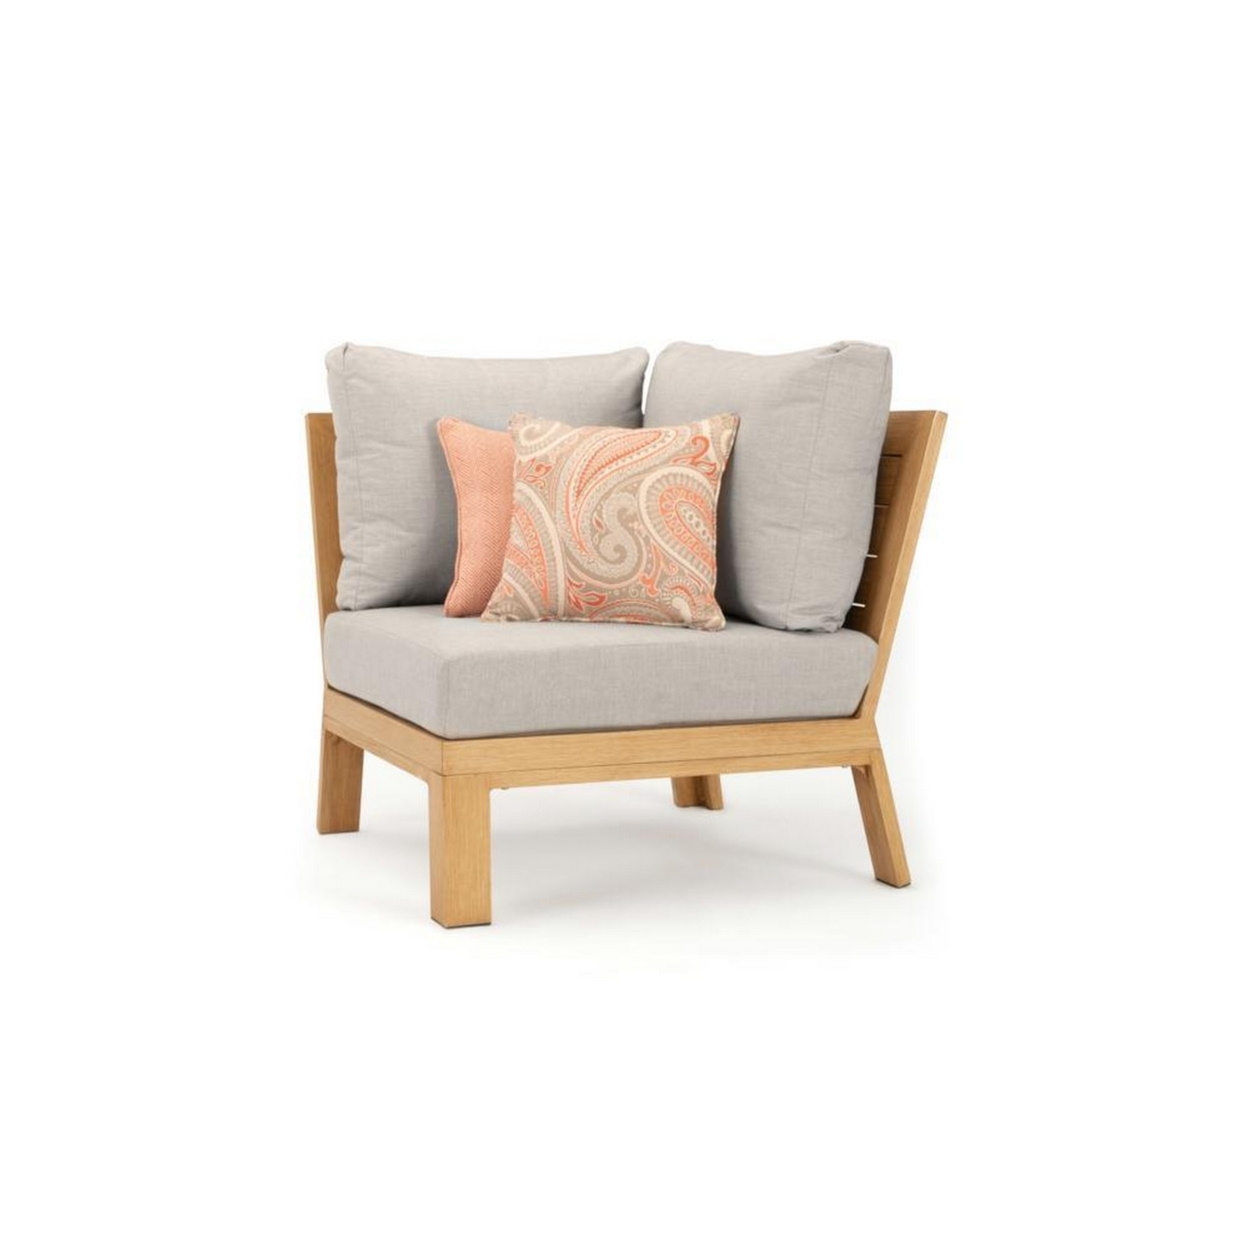 Keny 34 Inch Corner Chair, Silver Sunbrella Fabric Cushion, Aluminum Frame- Saltoro Sherpi